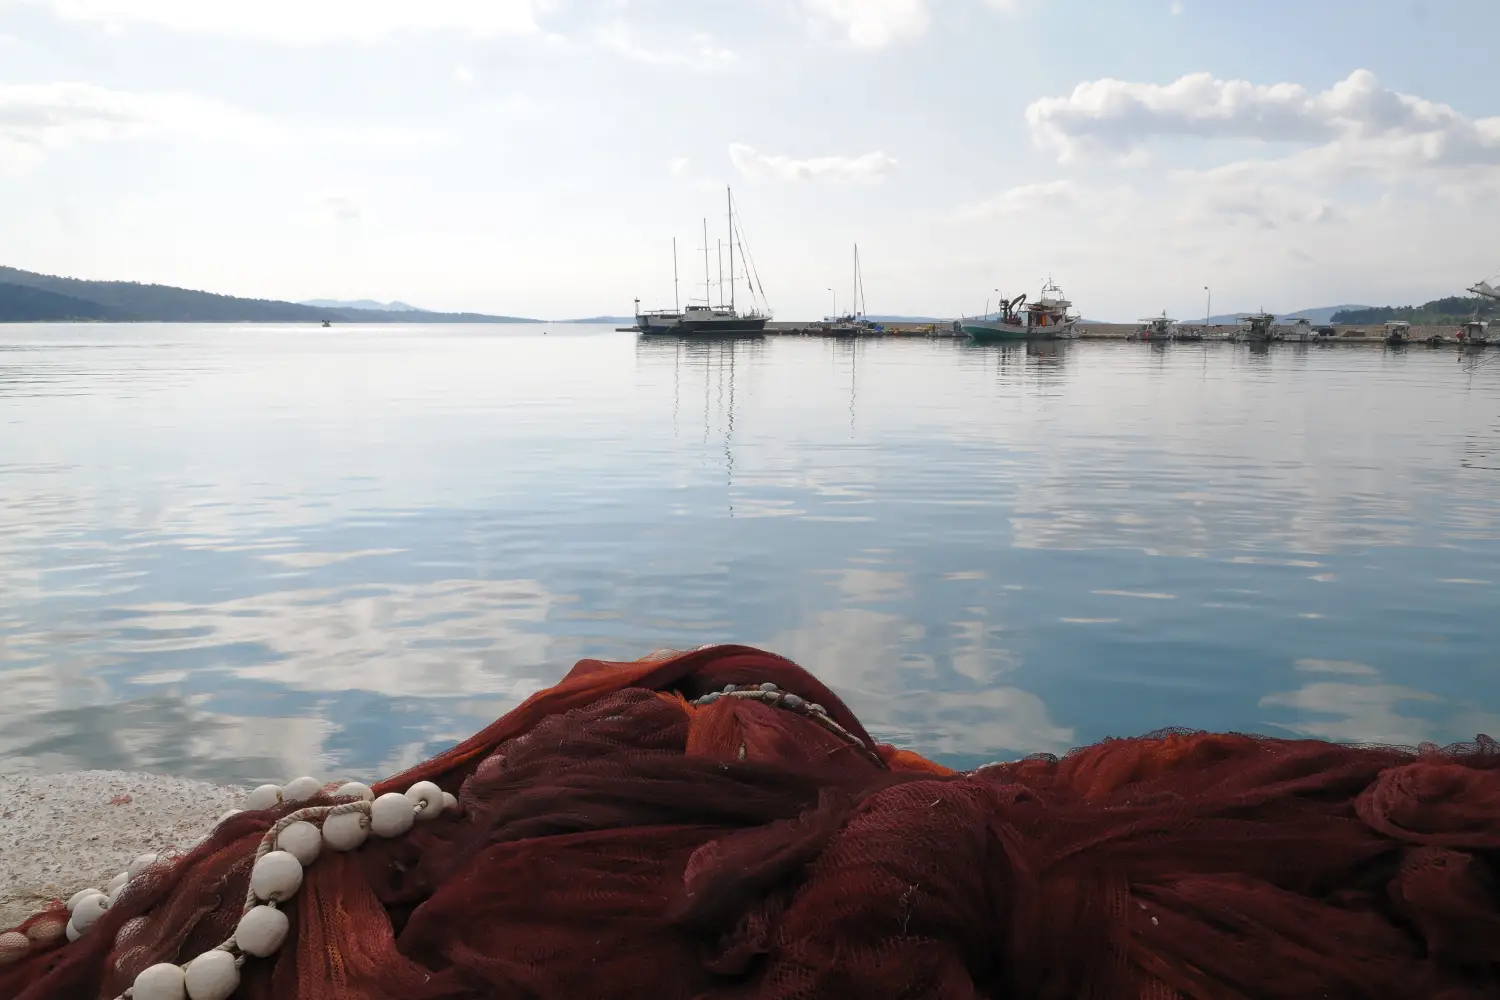 Ferry to Astakos - Astakos is the beautiful town in the Ionian Sea, Greece.